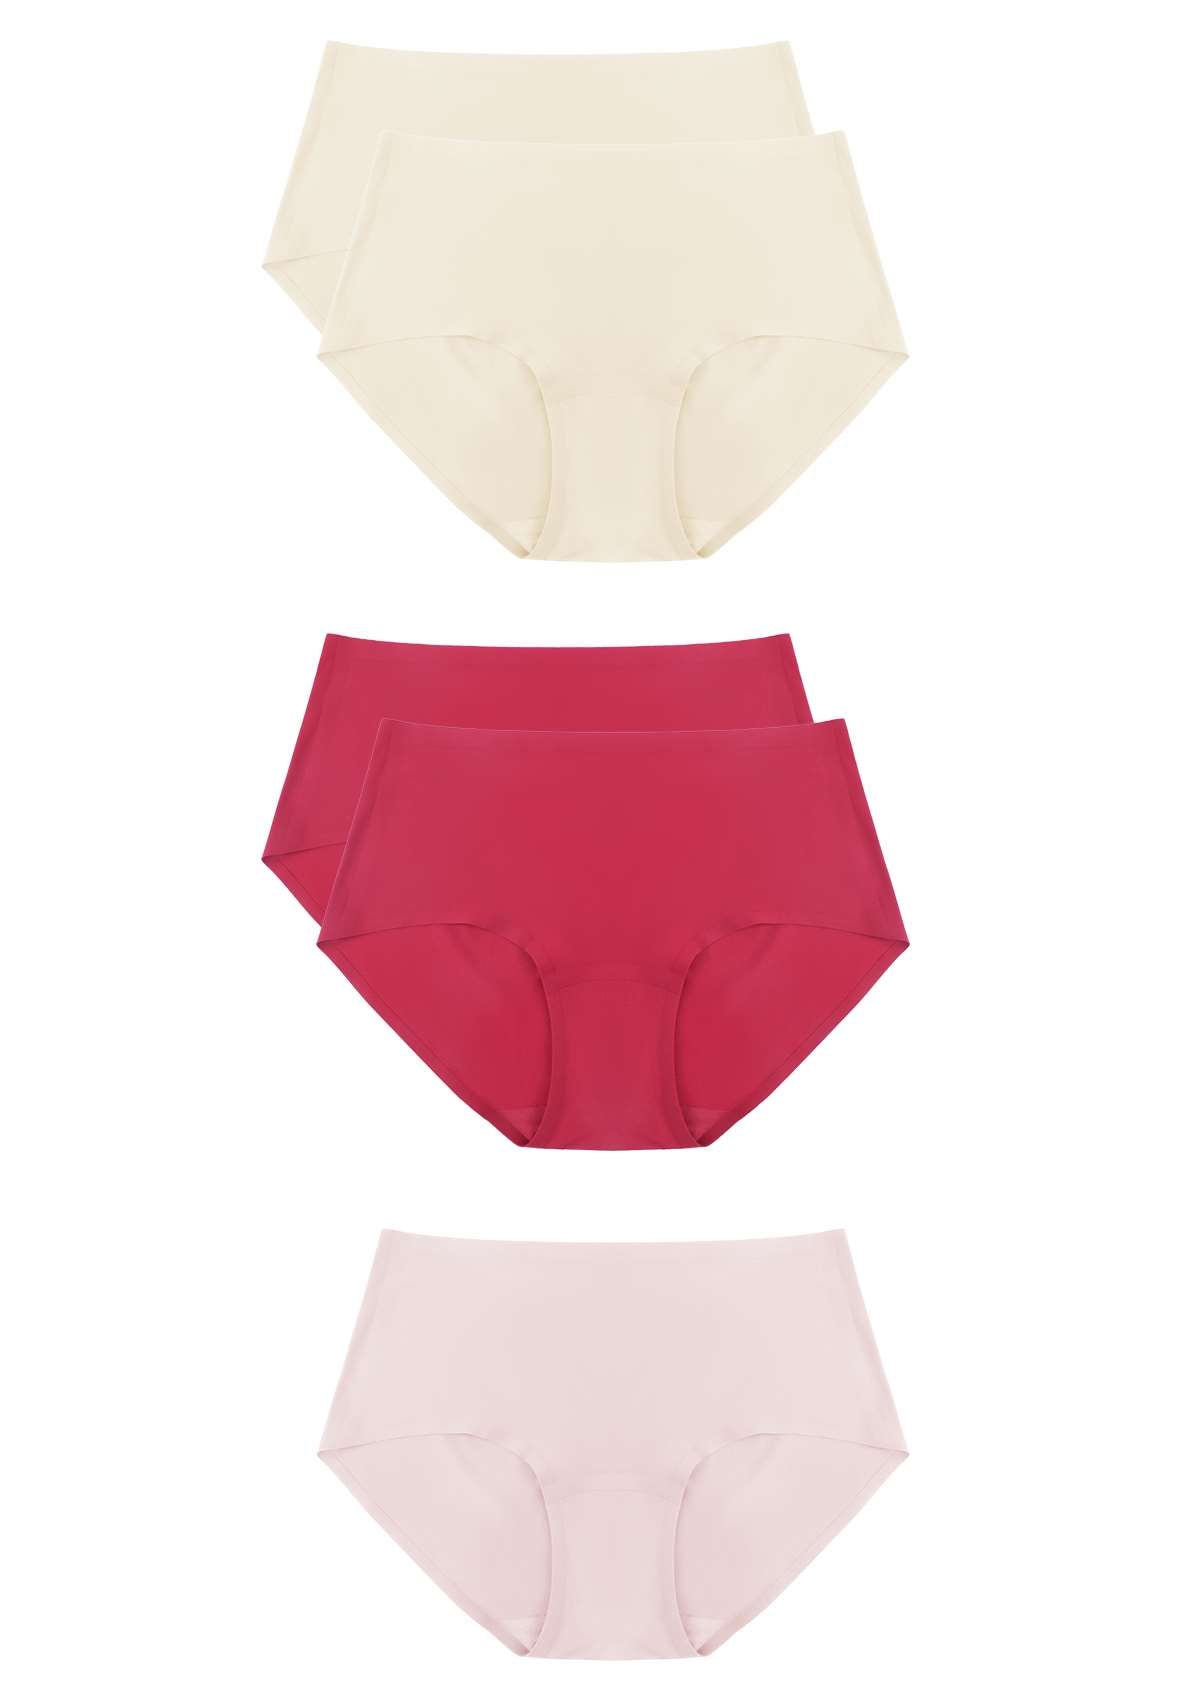 HSIA FlexiFit Soft Stretch Seamless Brief Underwear Bundle - 5 Packs/$20 / XS-L / 2*Peach Beige+2*Red+Dusty Rose